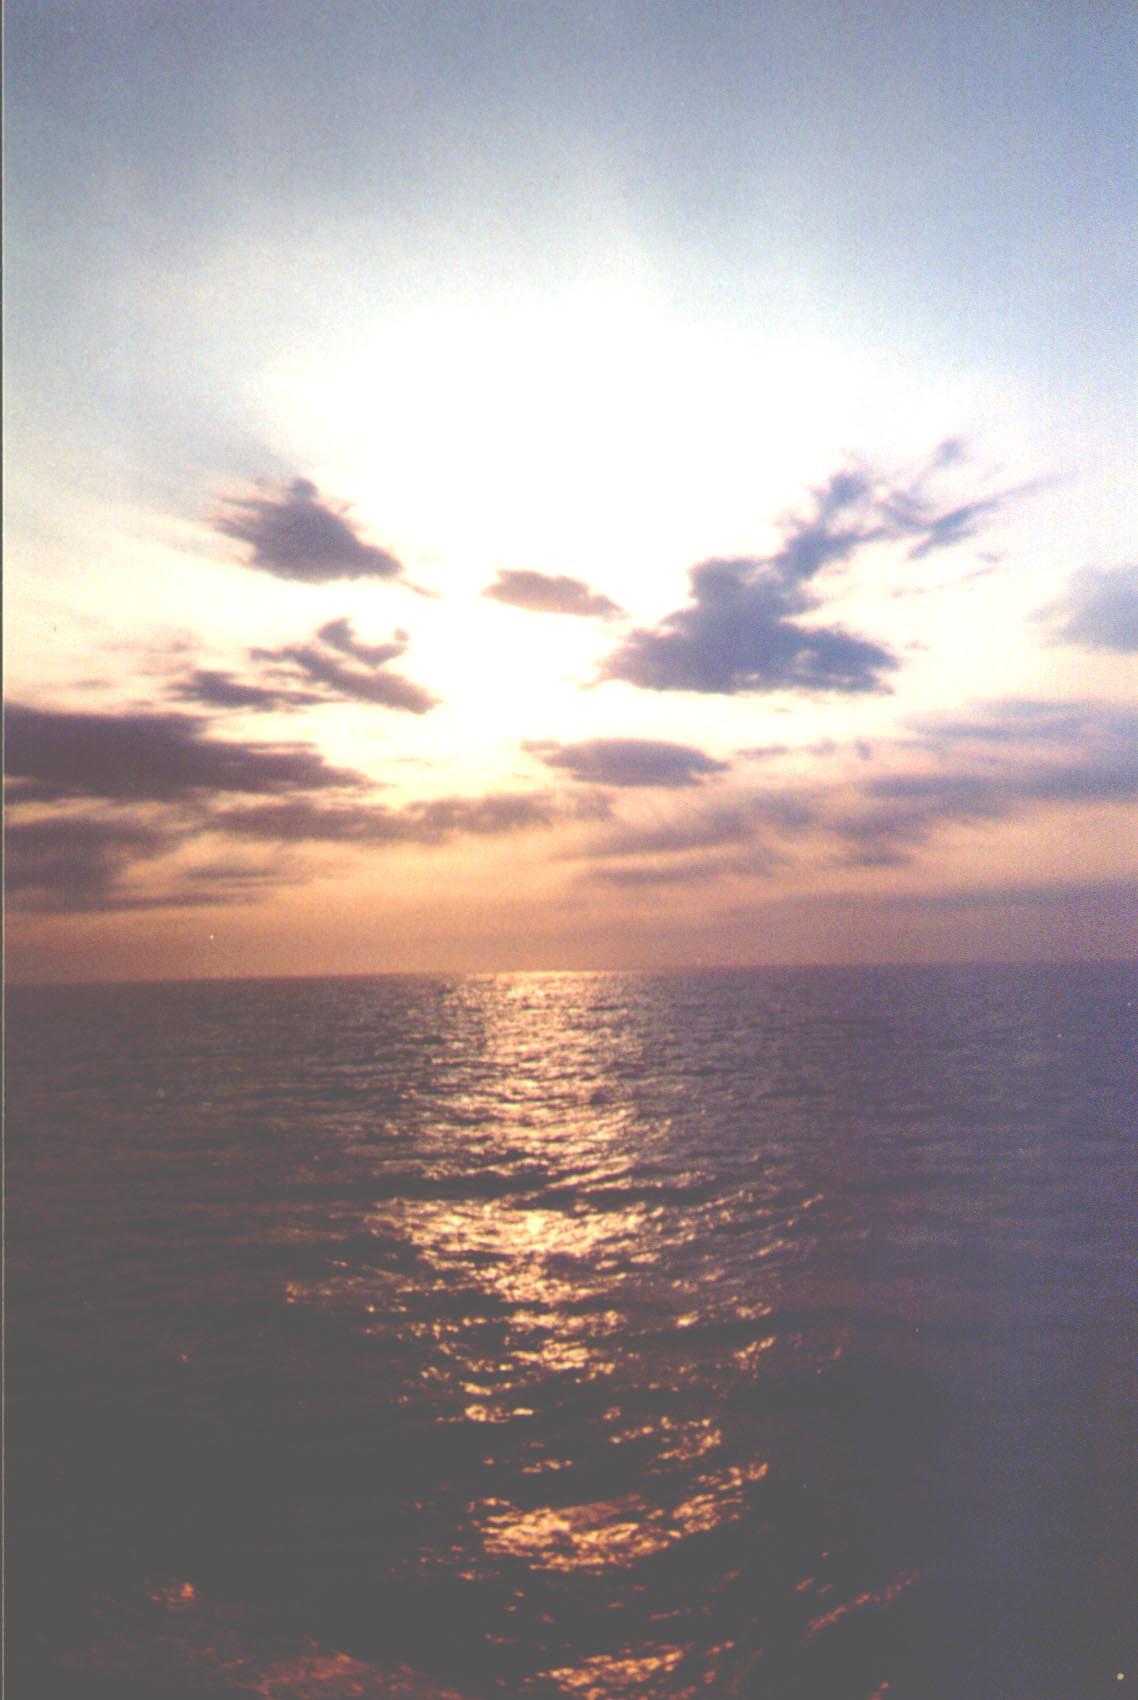 the sun sets on beautiful seas